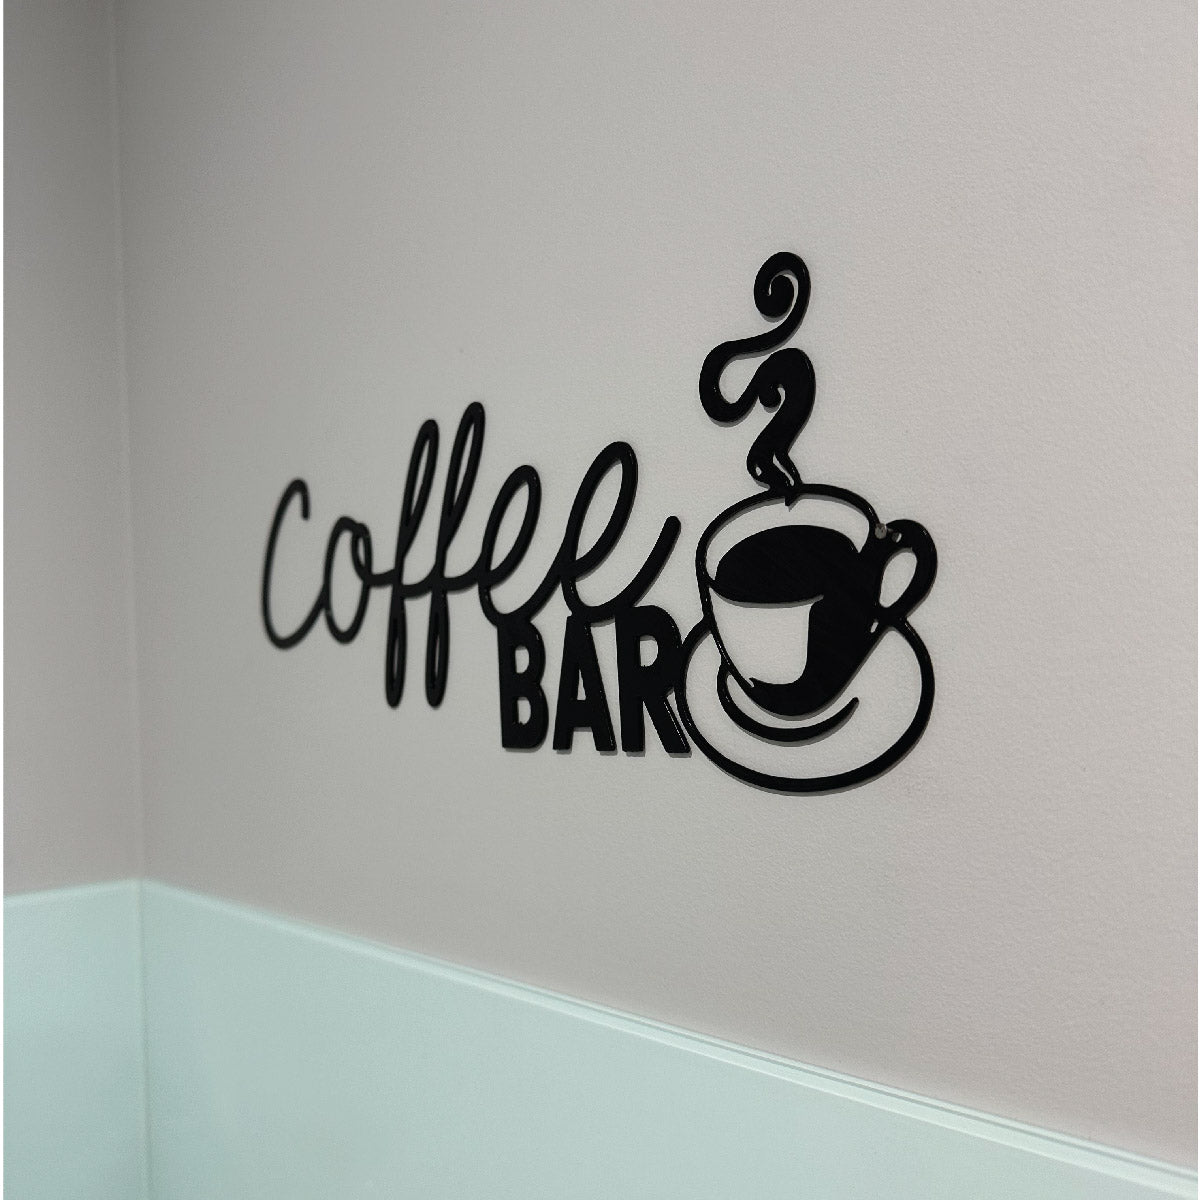 Metal Coffee Bar Sign